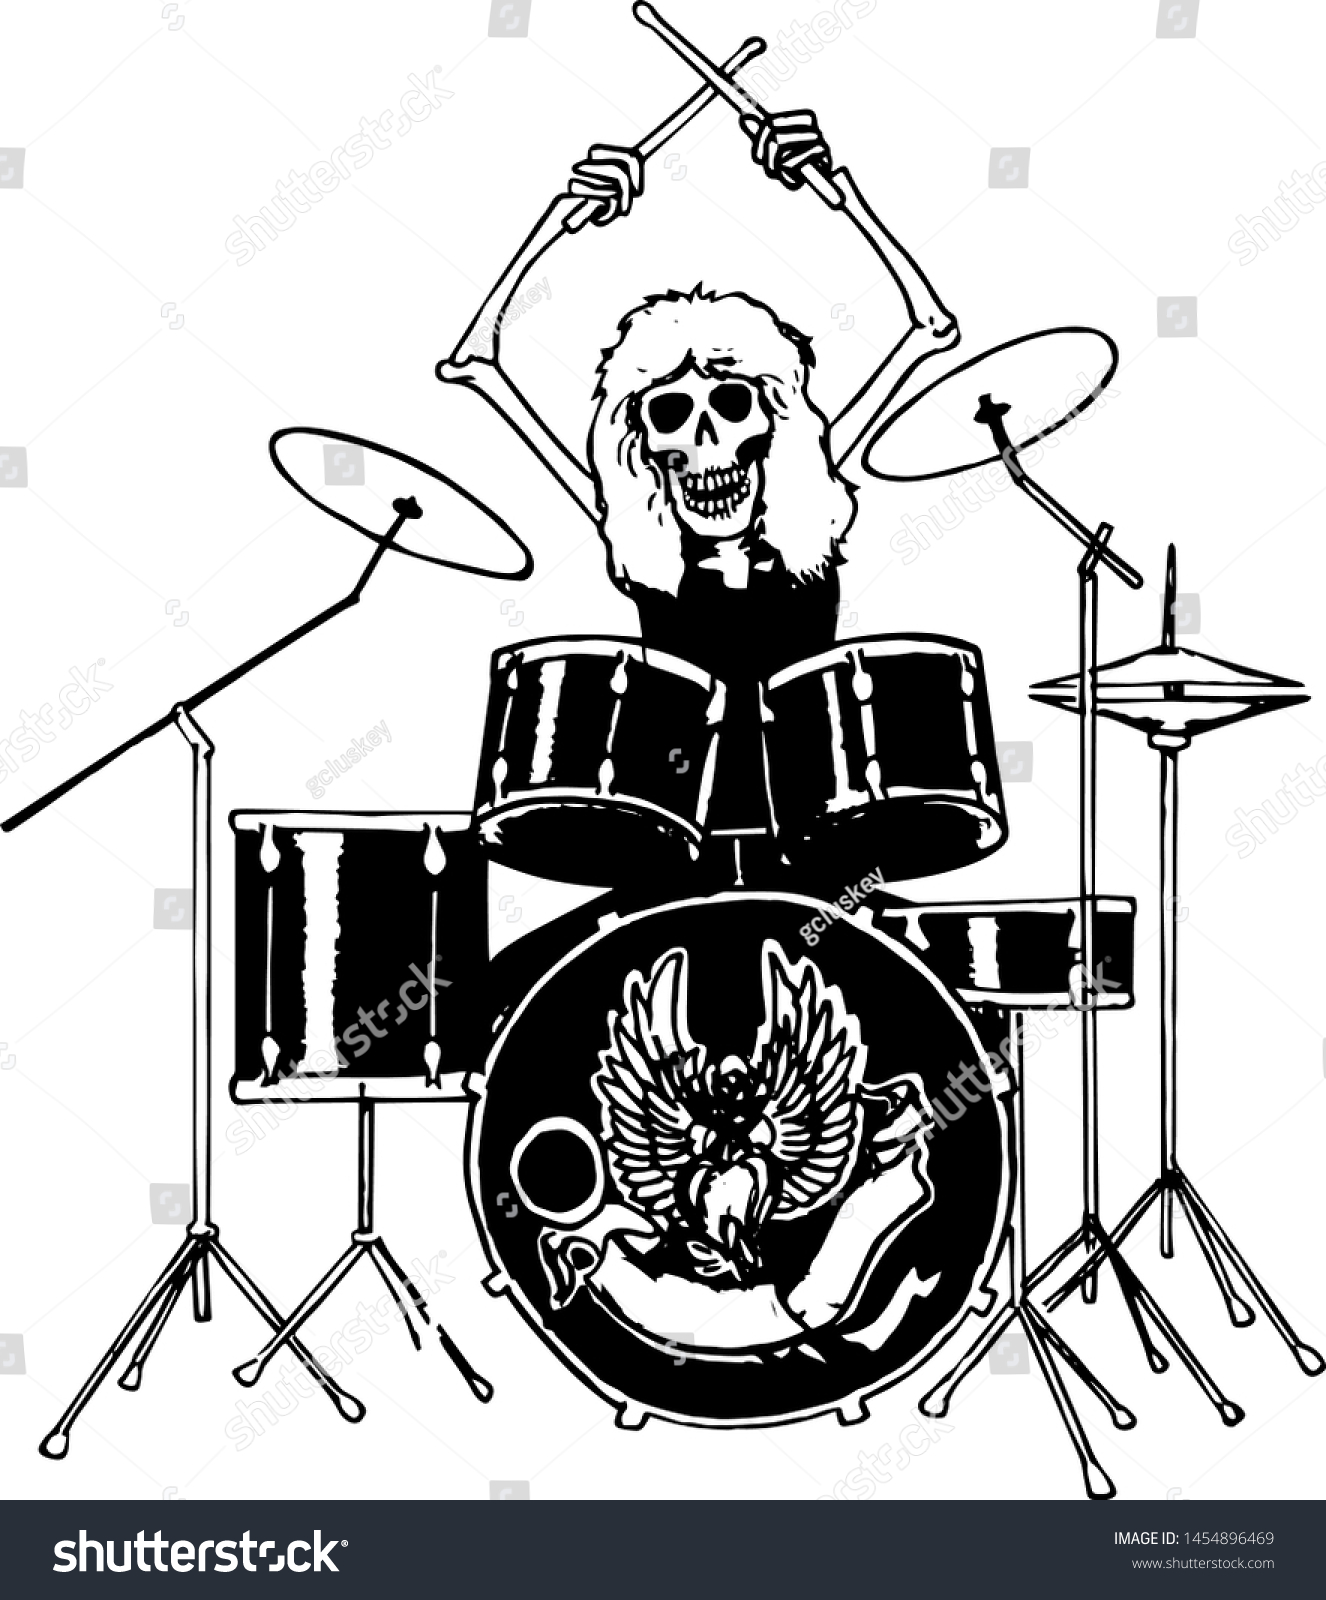 Rock Drummer Skeleton Art Vector Stock Vector (Royalty Free) 1454896469